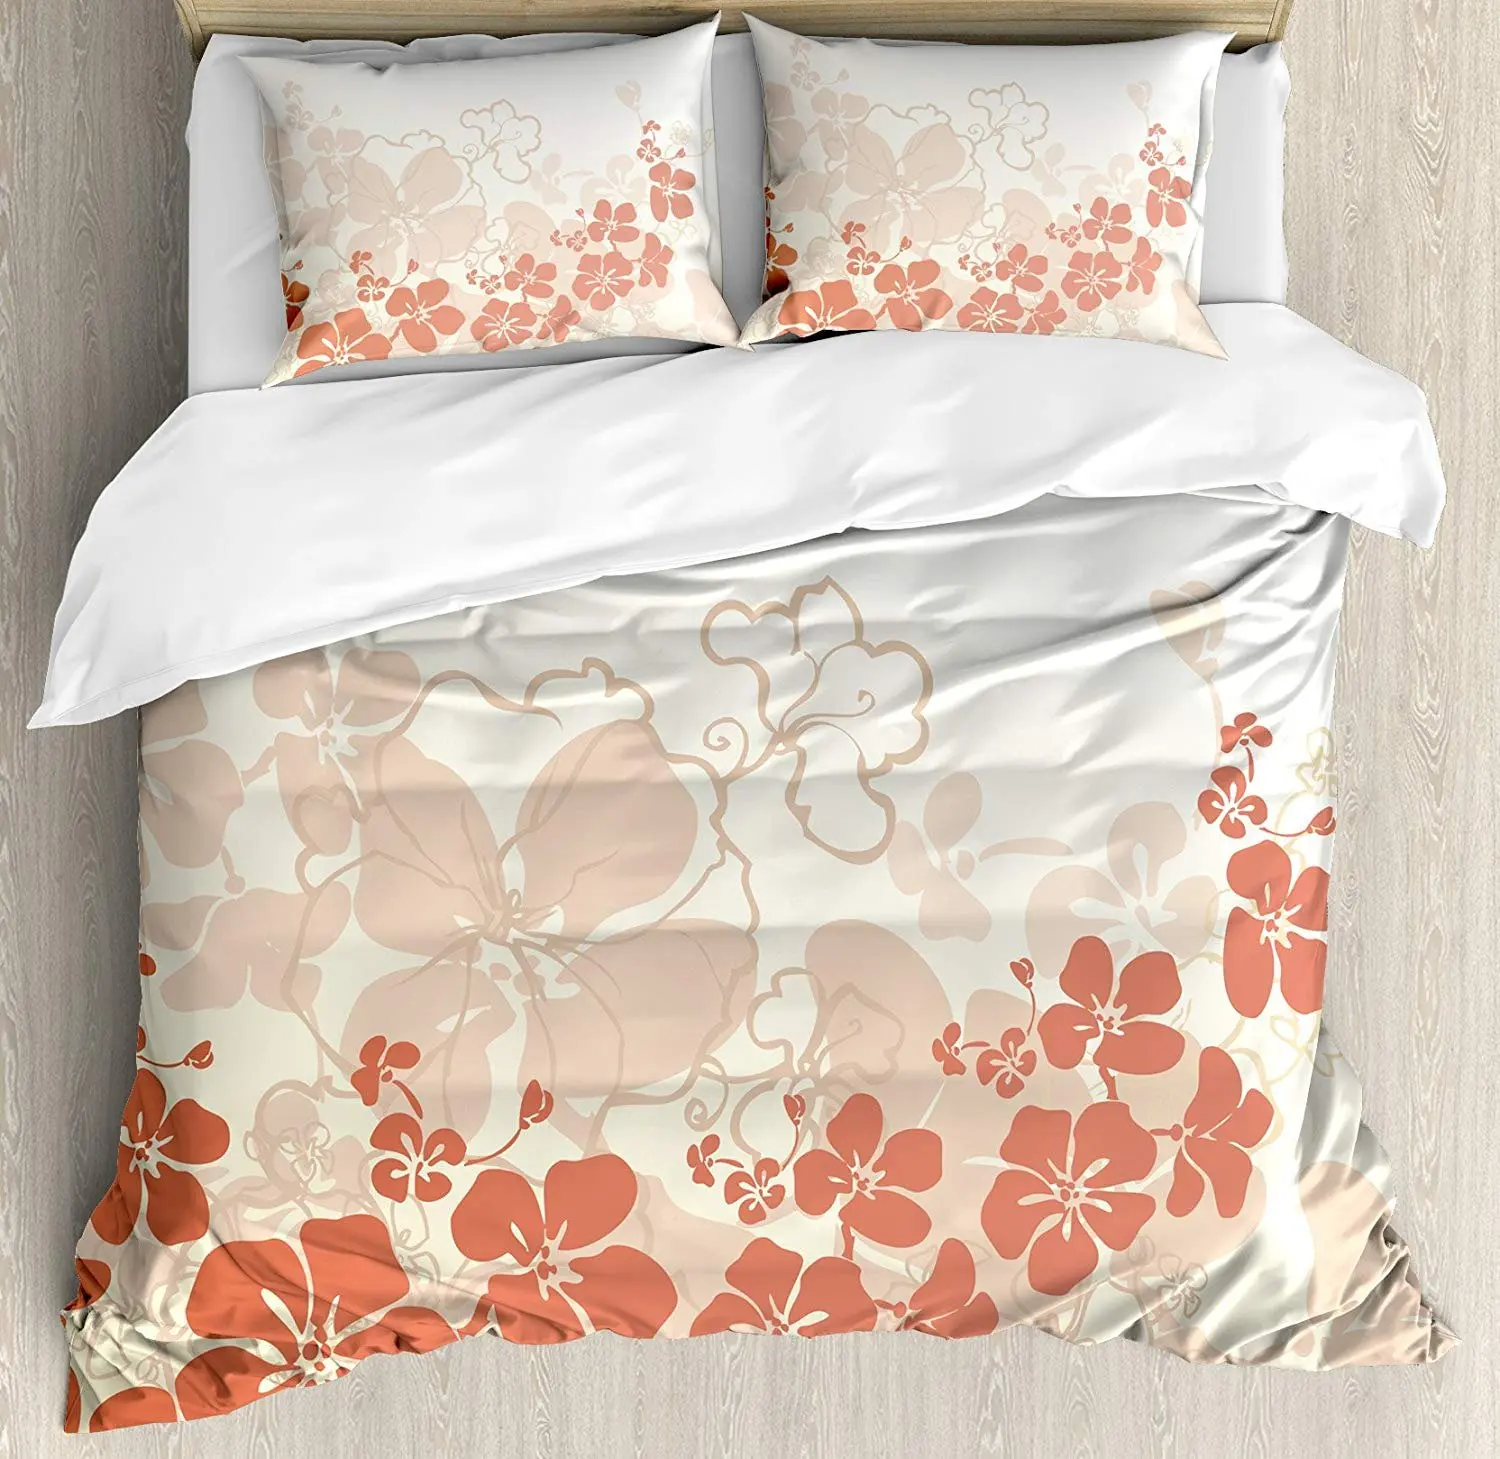 

Hawaiian Bedding Set Hawaii Flowers Silhouette Tropical Plants Ornamental Floral Illustration Duvet Cover Pillowcase for Home